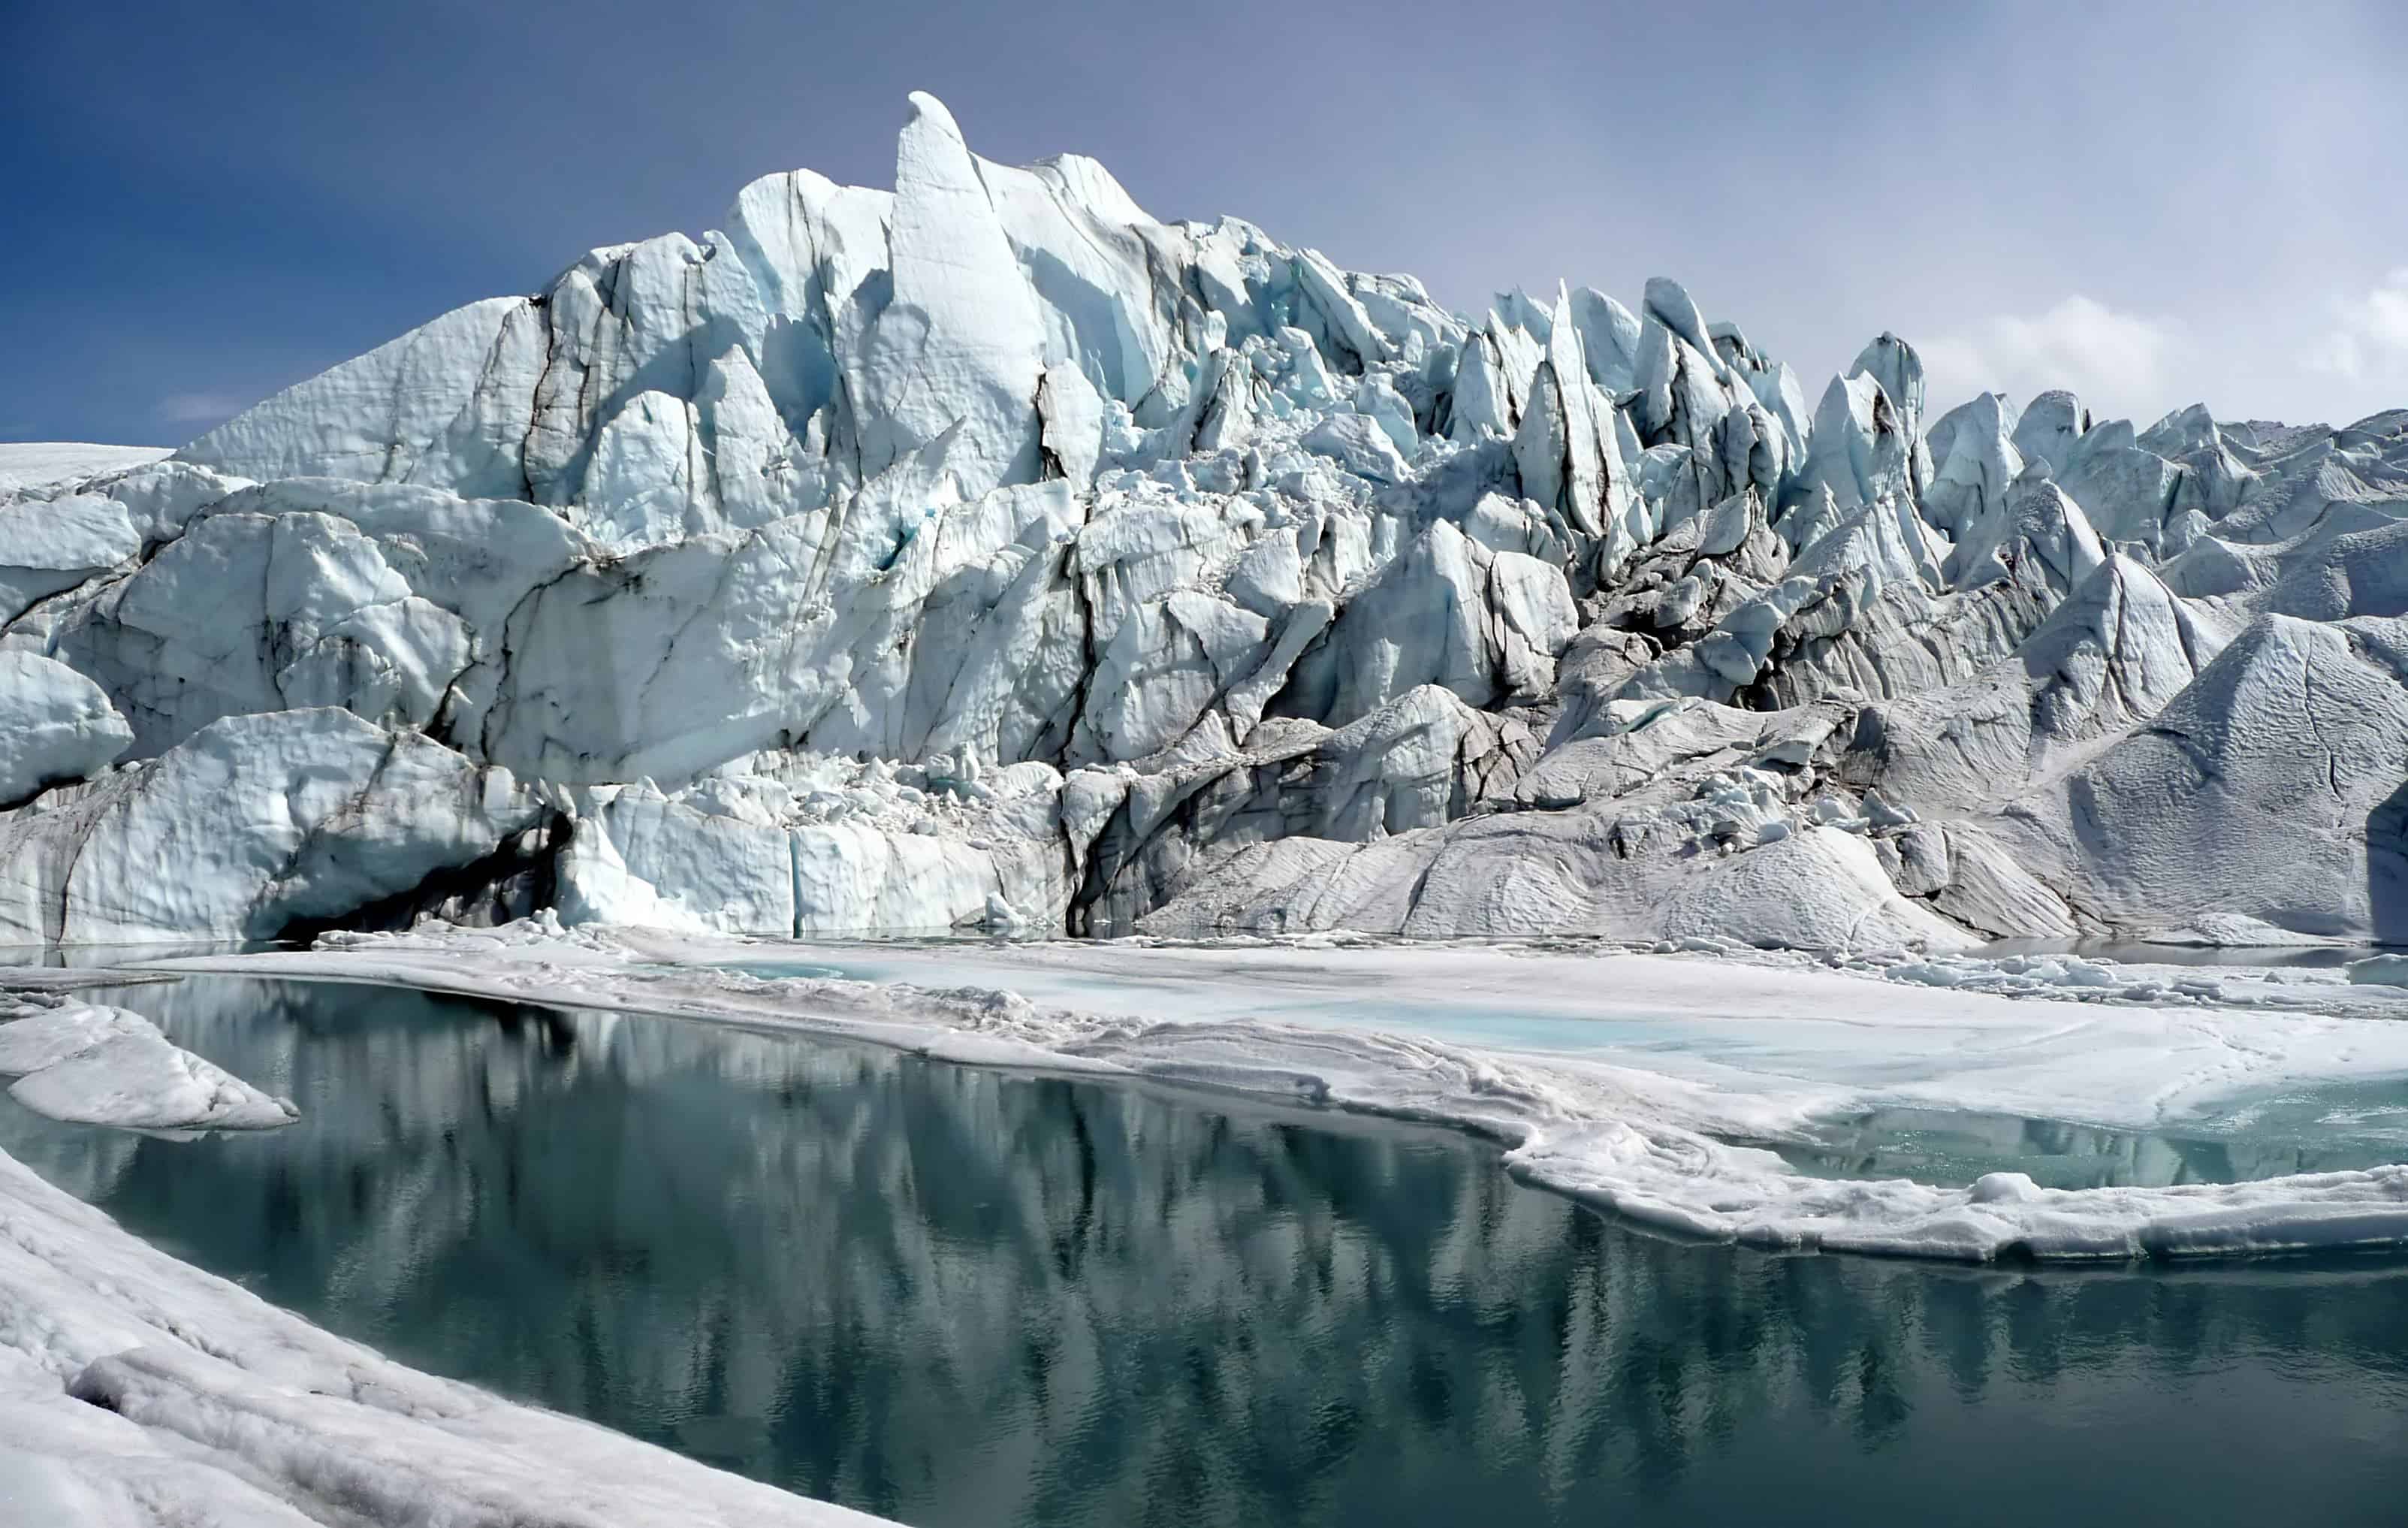 Mouth of the Matanuska Glacier in Alaska. Image credits: Sbork / Wikipedia.